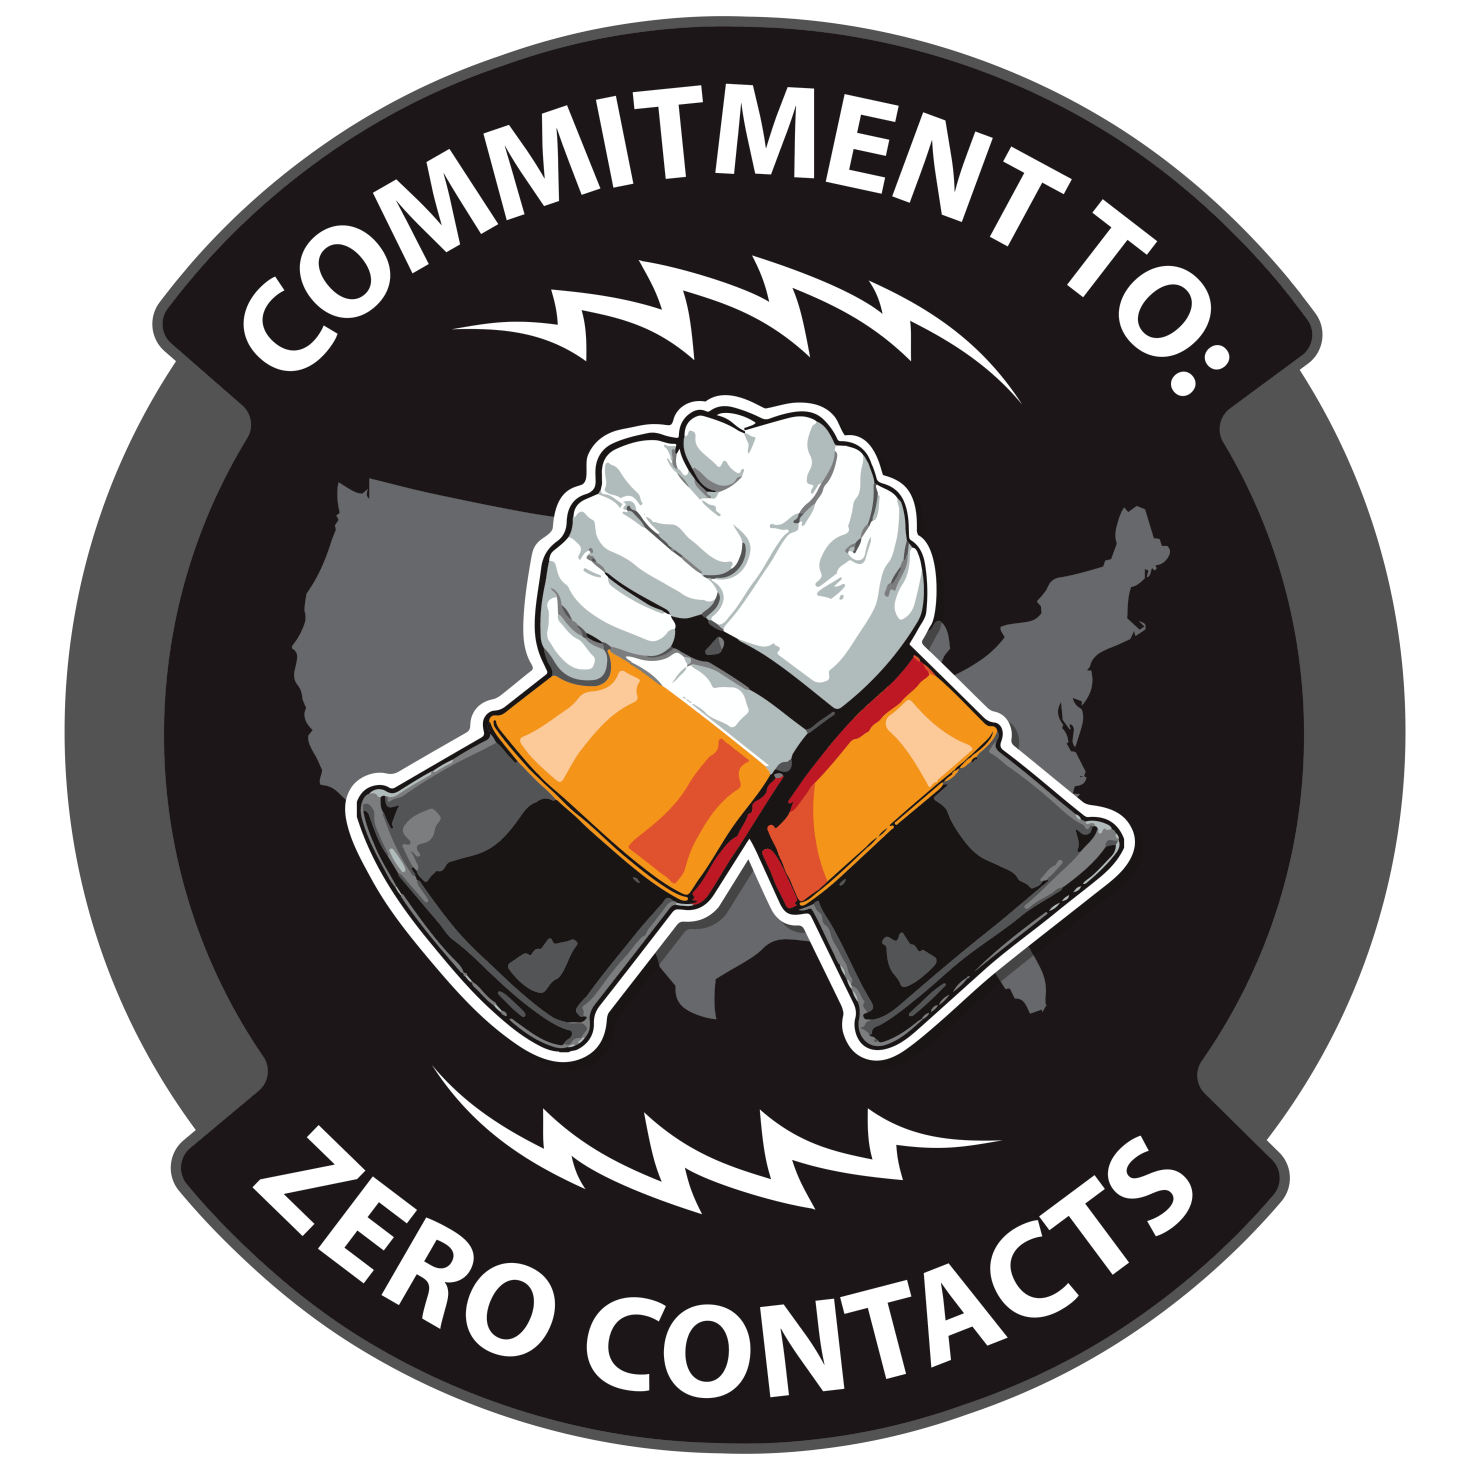 Commitment To Zero Contacts logo.